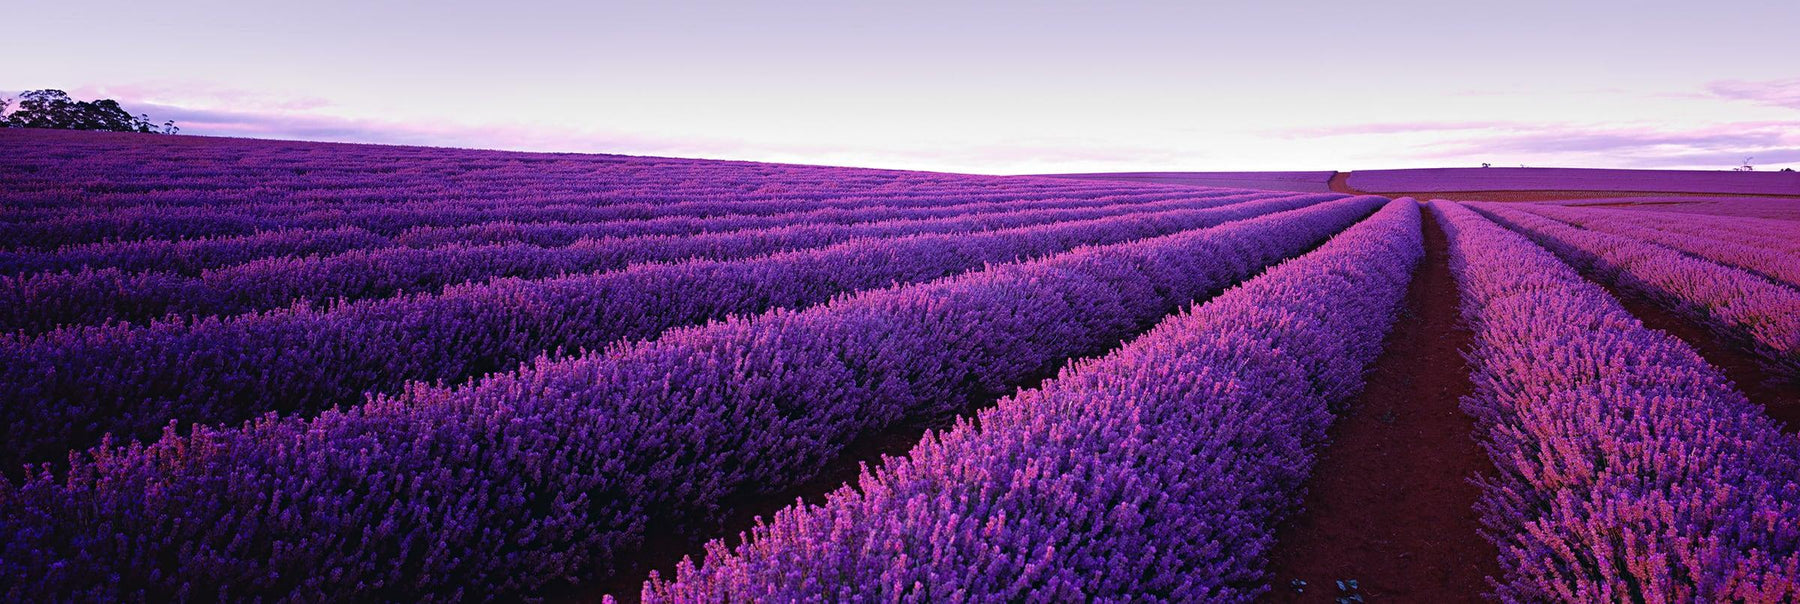 Endless field of purple lavender bushes in Tasmania, Australia